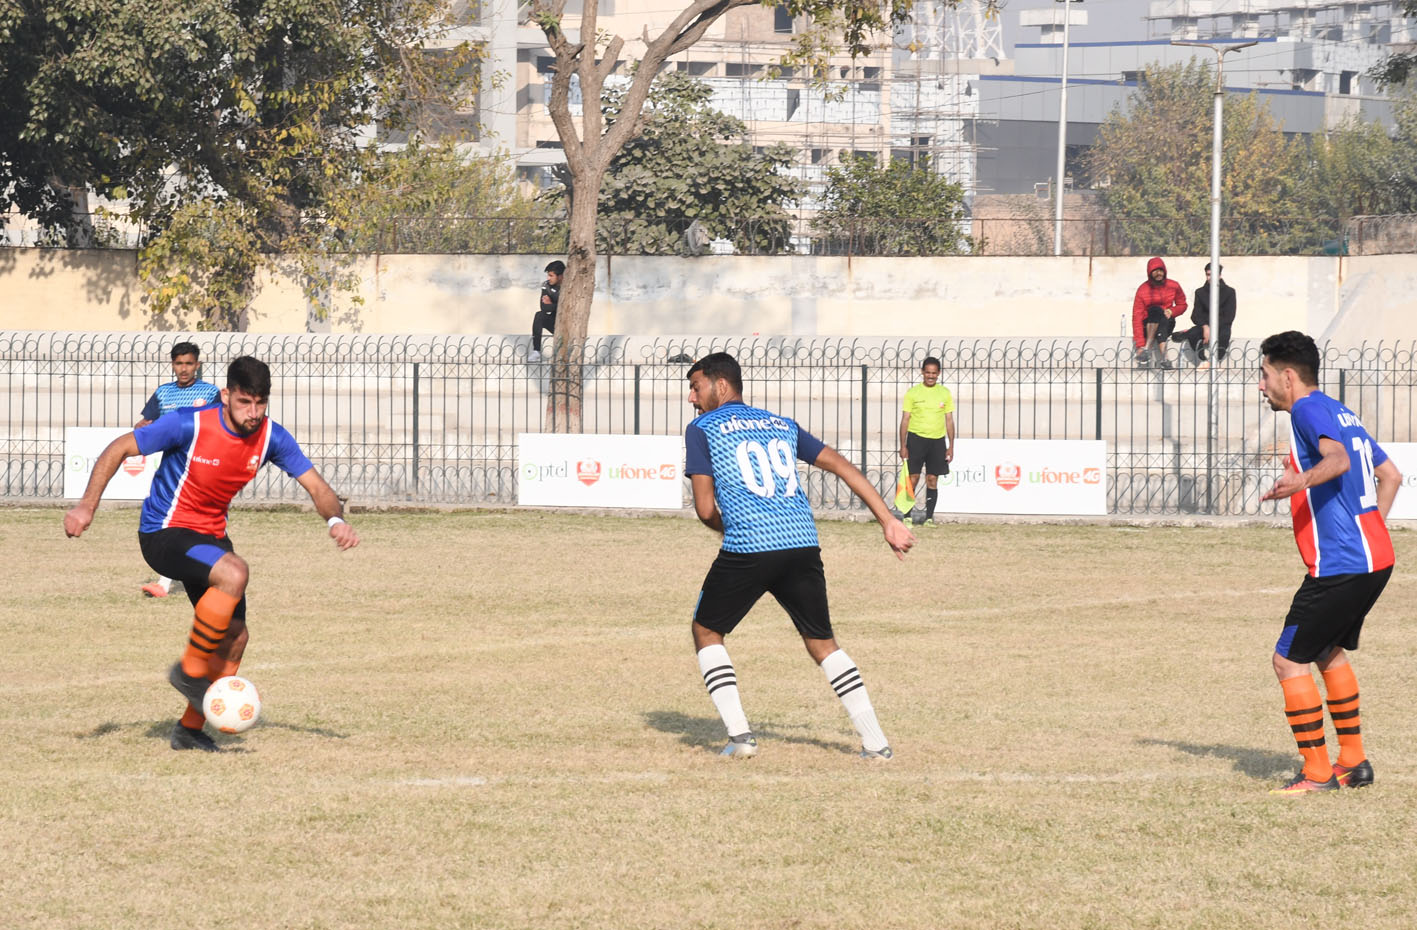 DFA Mardan, Waziristan Combined book berths in Semi Finals of Ufone 4G Football Cup Khyber Pakhtunkhwa